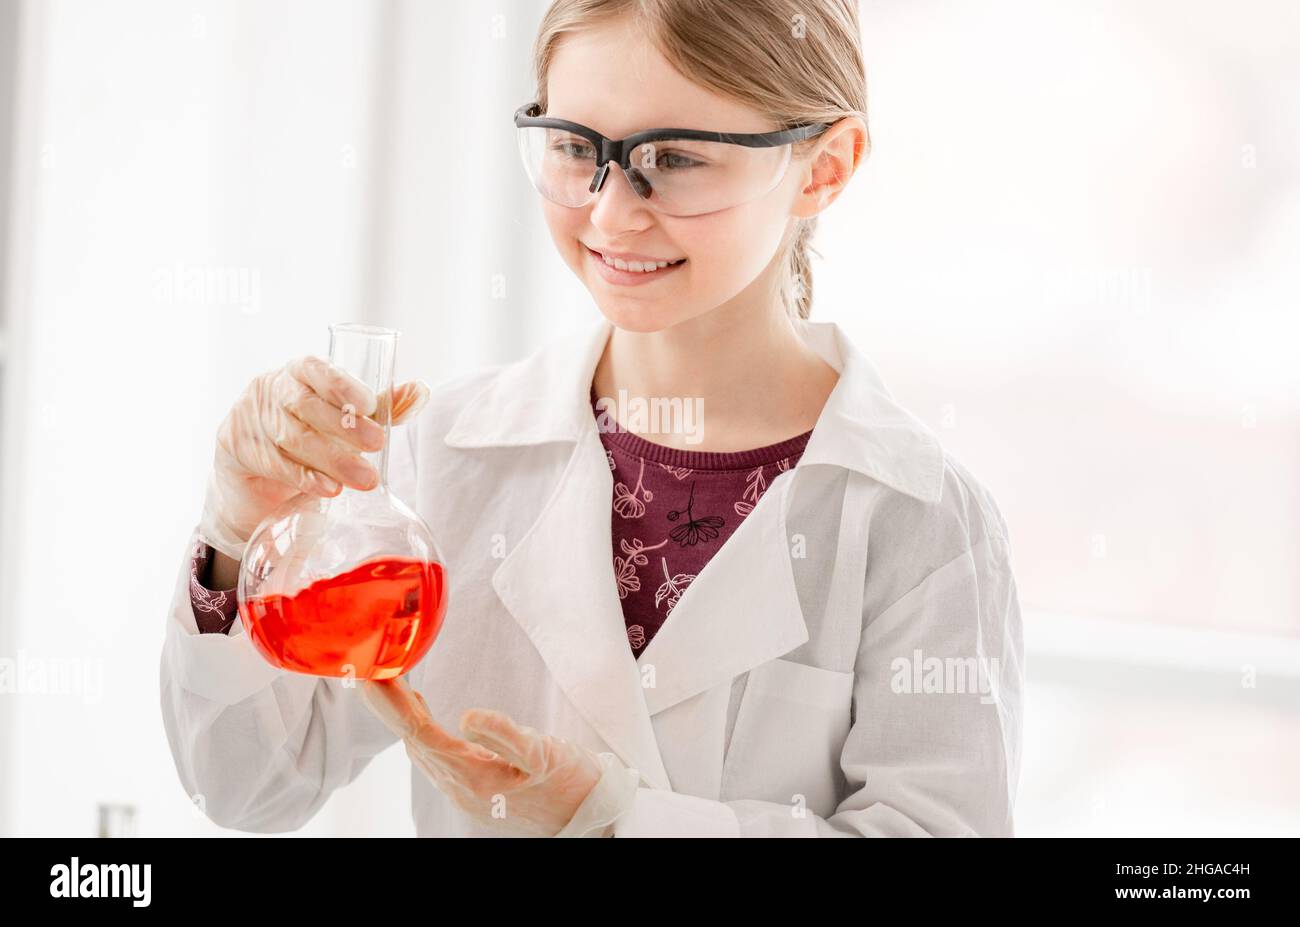 Girl on chemistry lesson Stock Photo